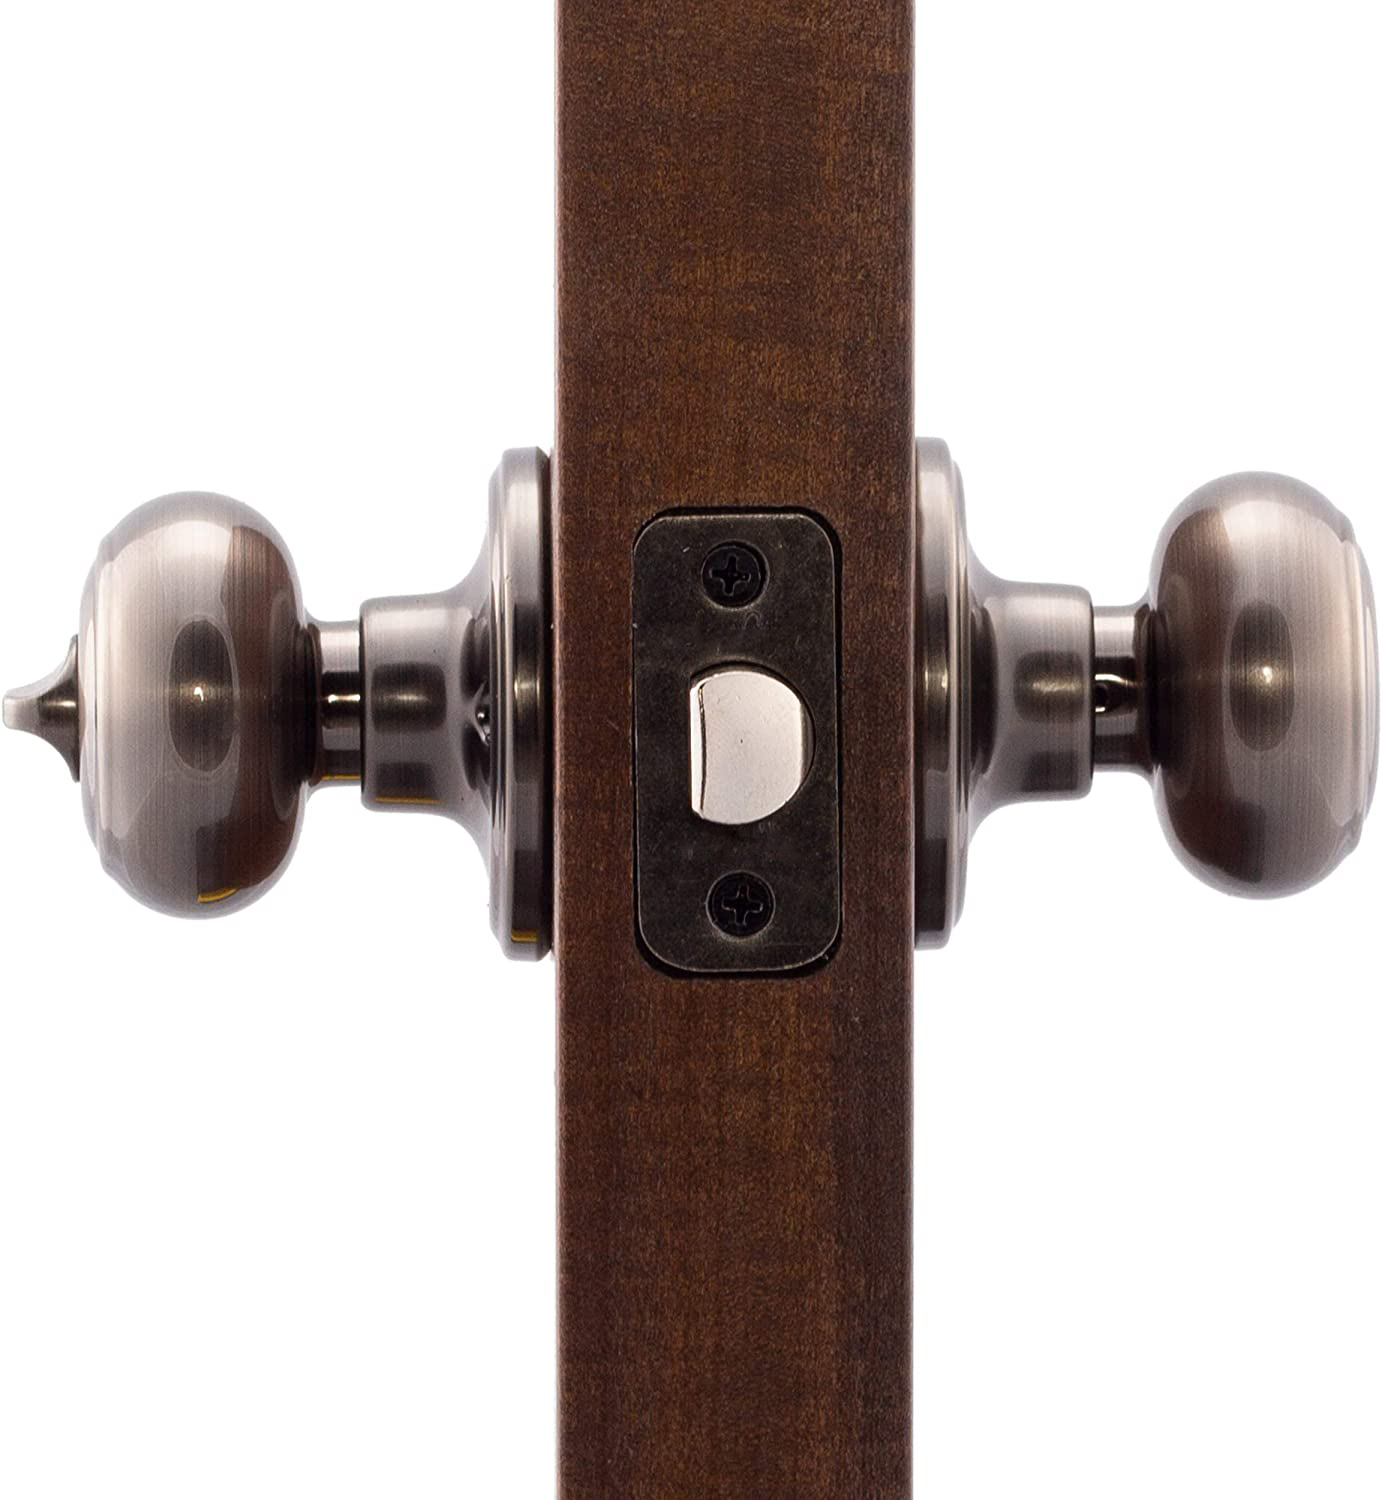 How to install a door knob lock ？